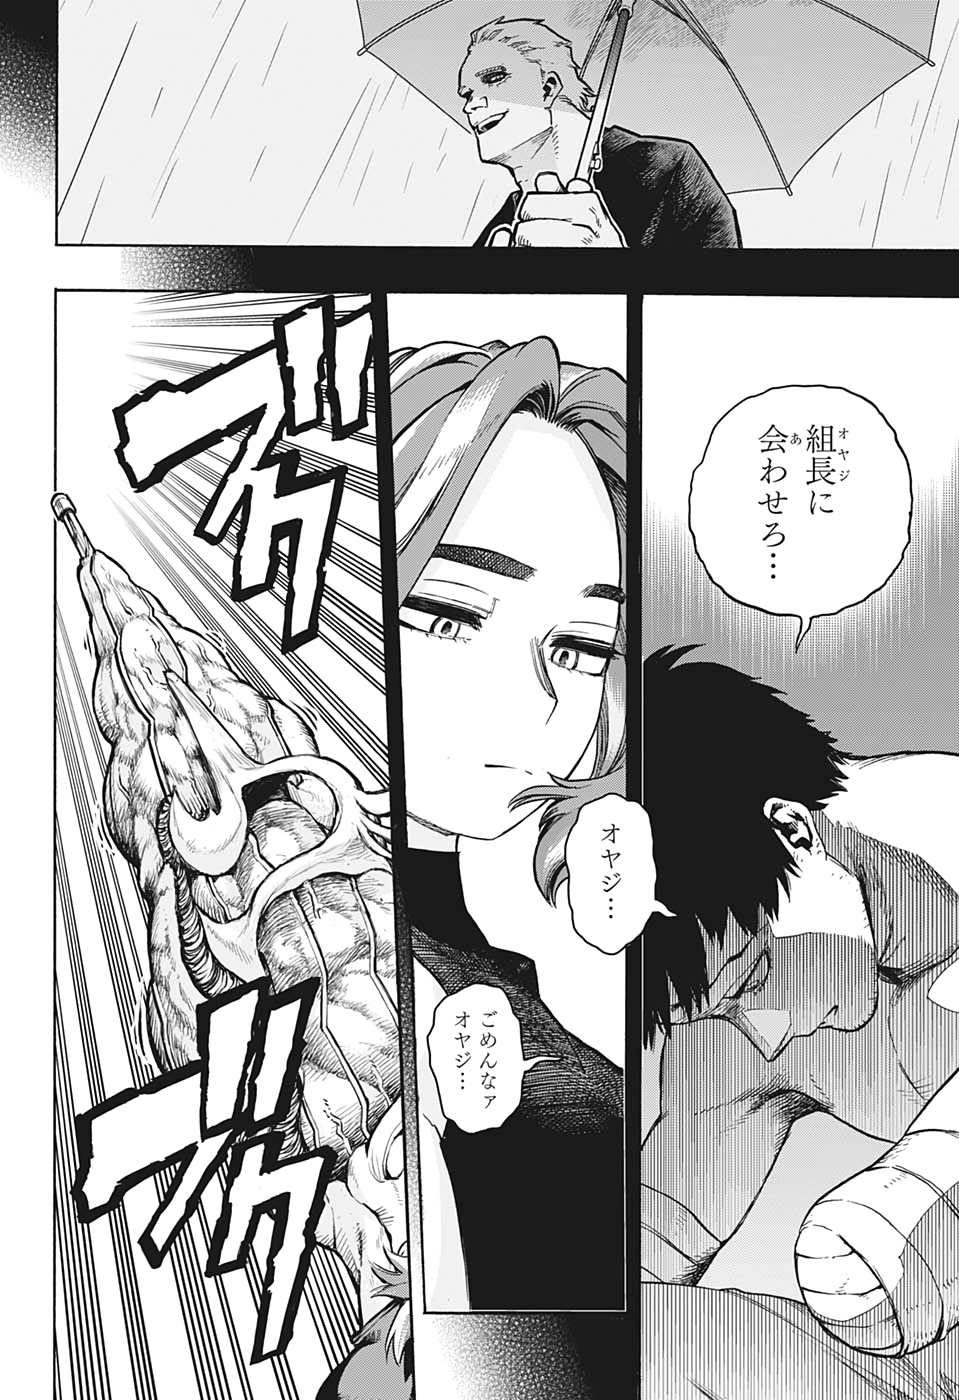 Boku no Hero Academia - Chapter 315 - Page 2